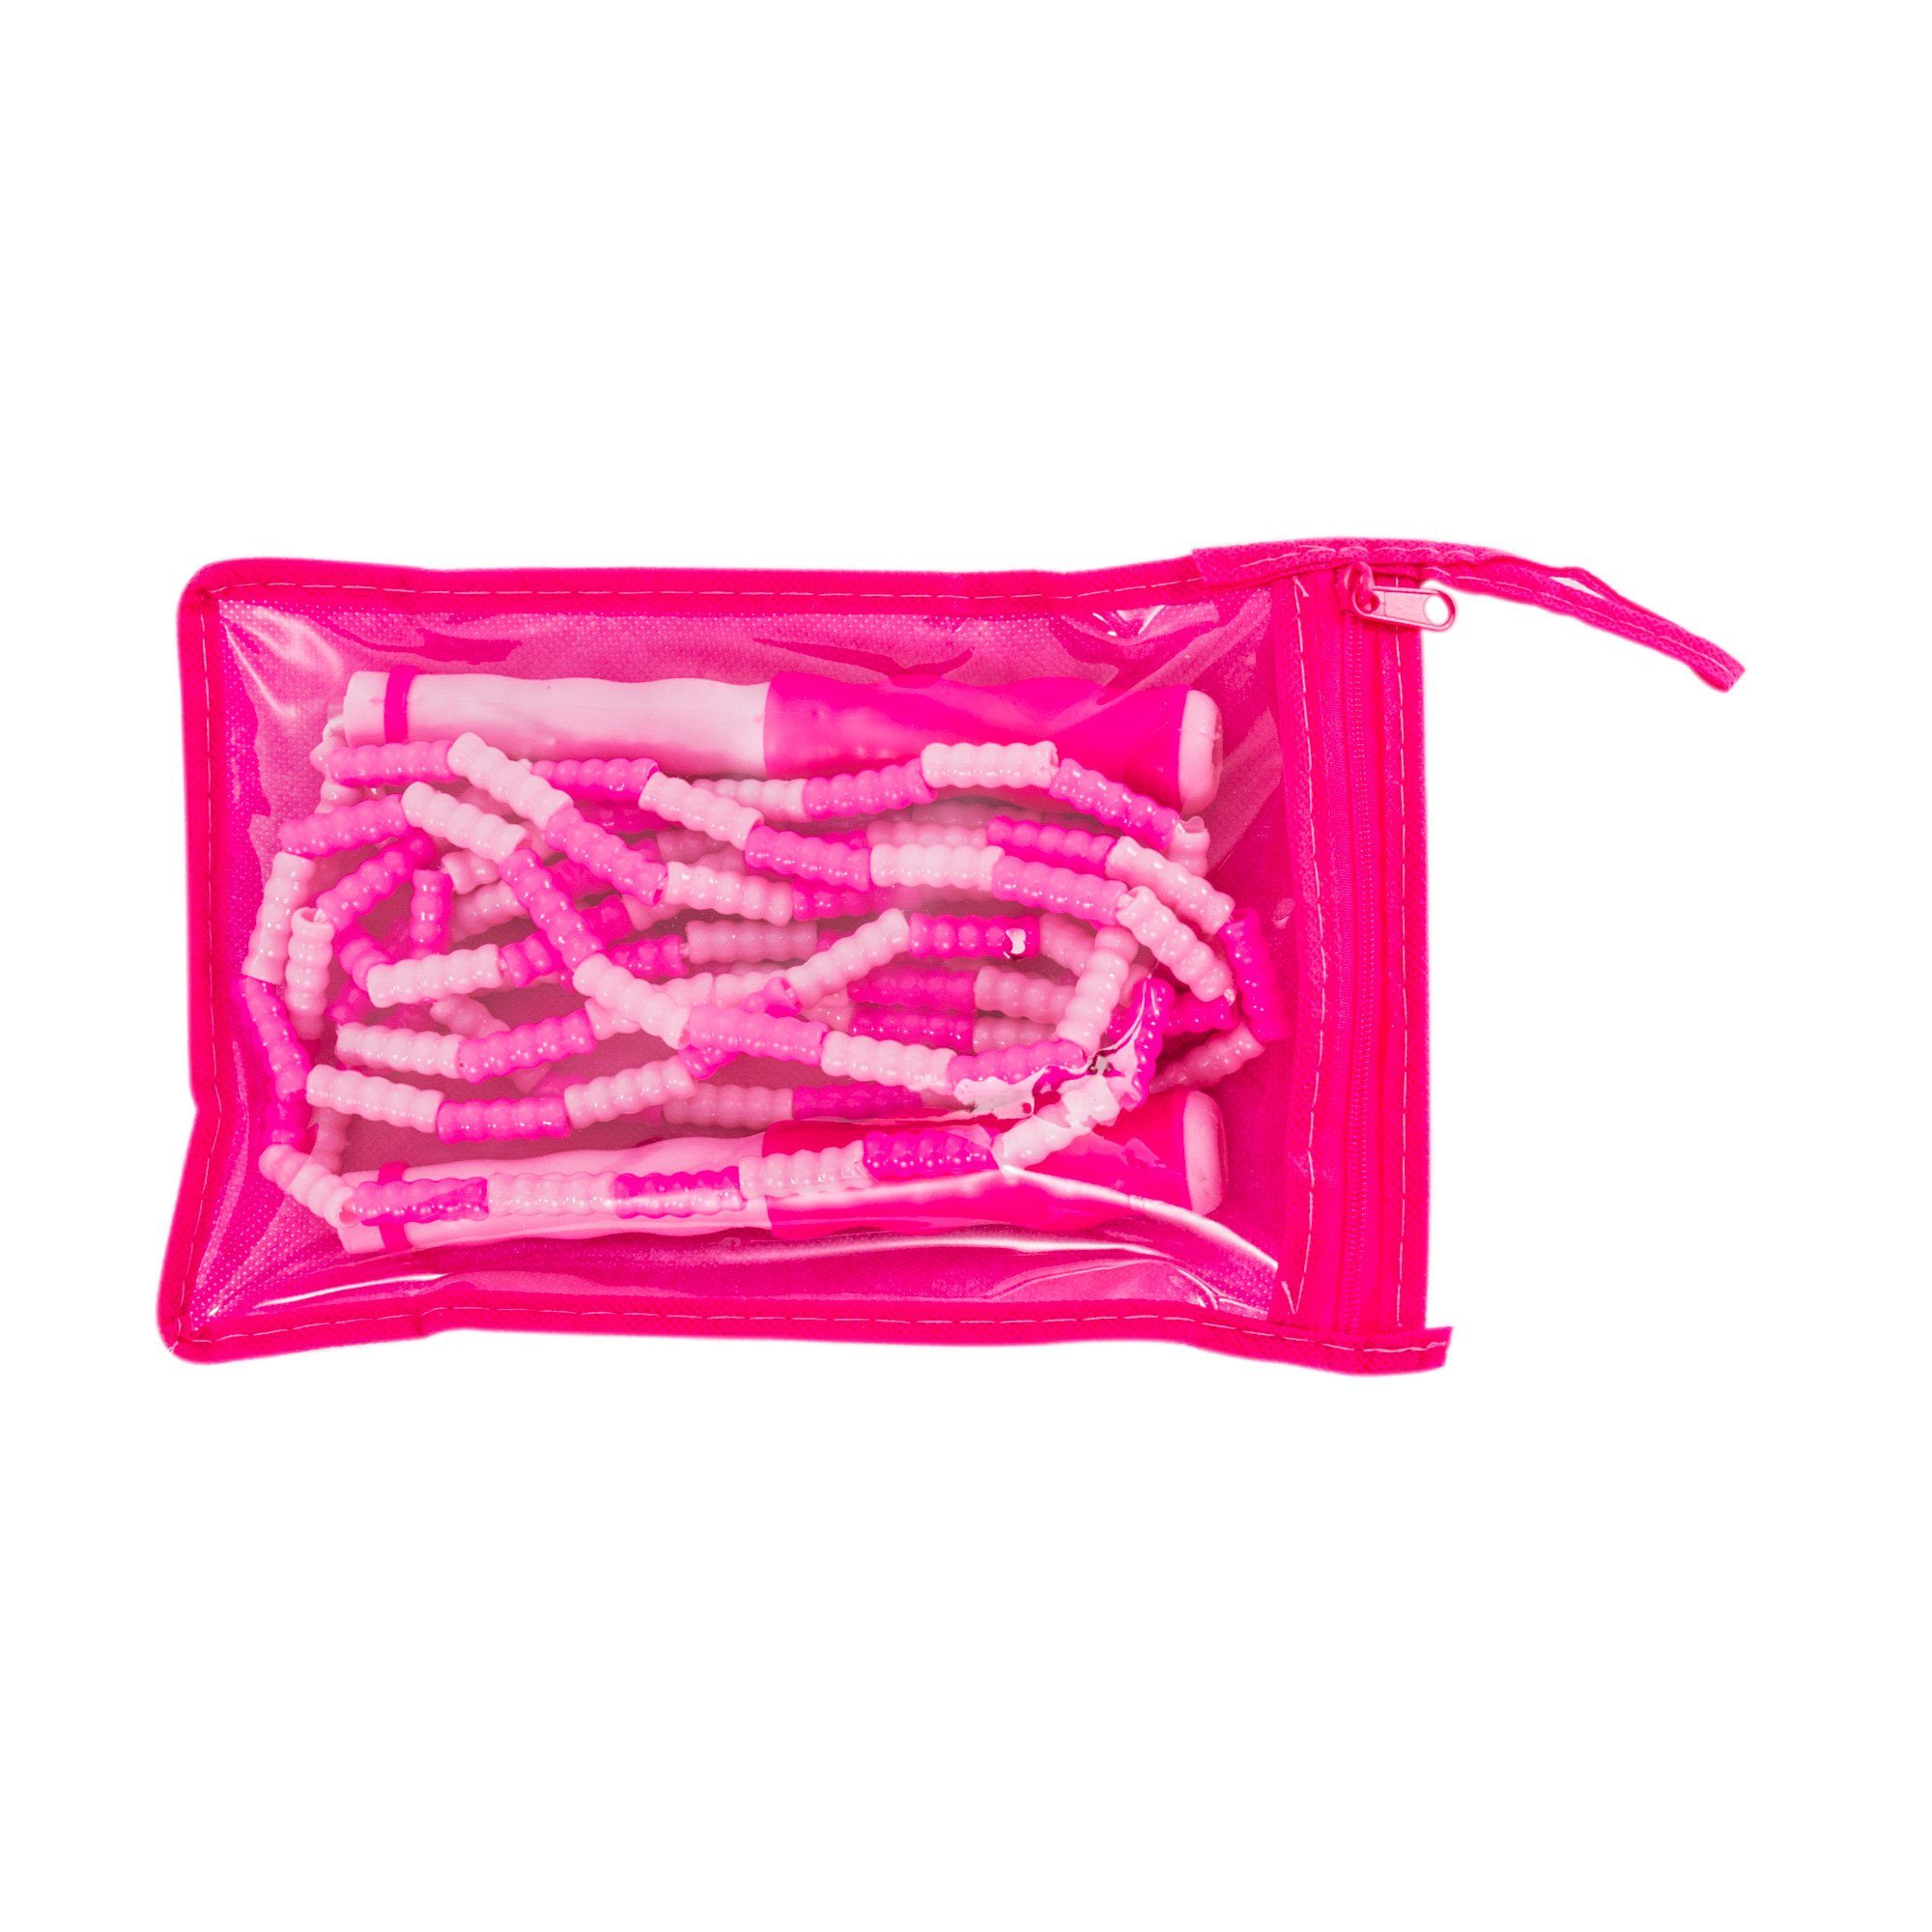 Penelife Springseil Jump Länge und für rosa Seillänge verstellbares Rope Erwachsene Springseil, verstellbar - 280 Kinder Beaded cm